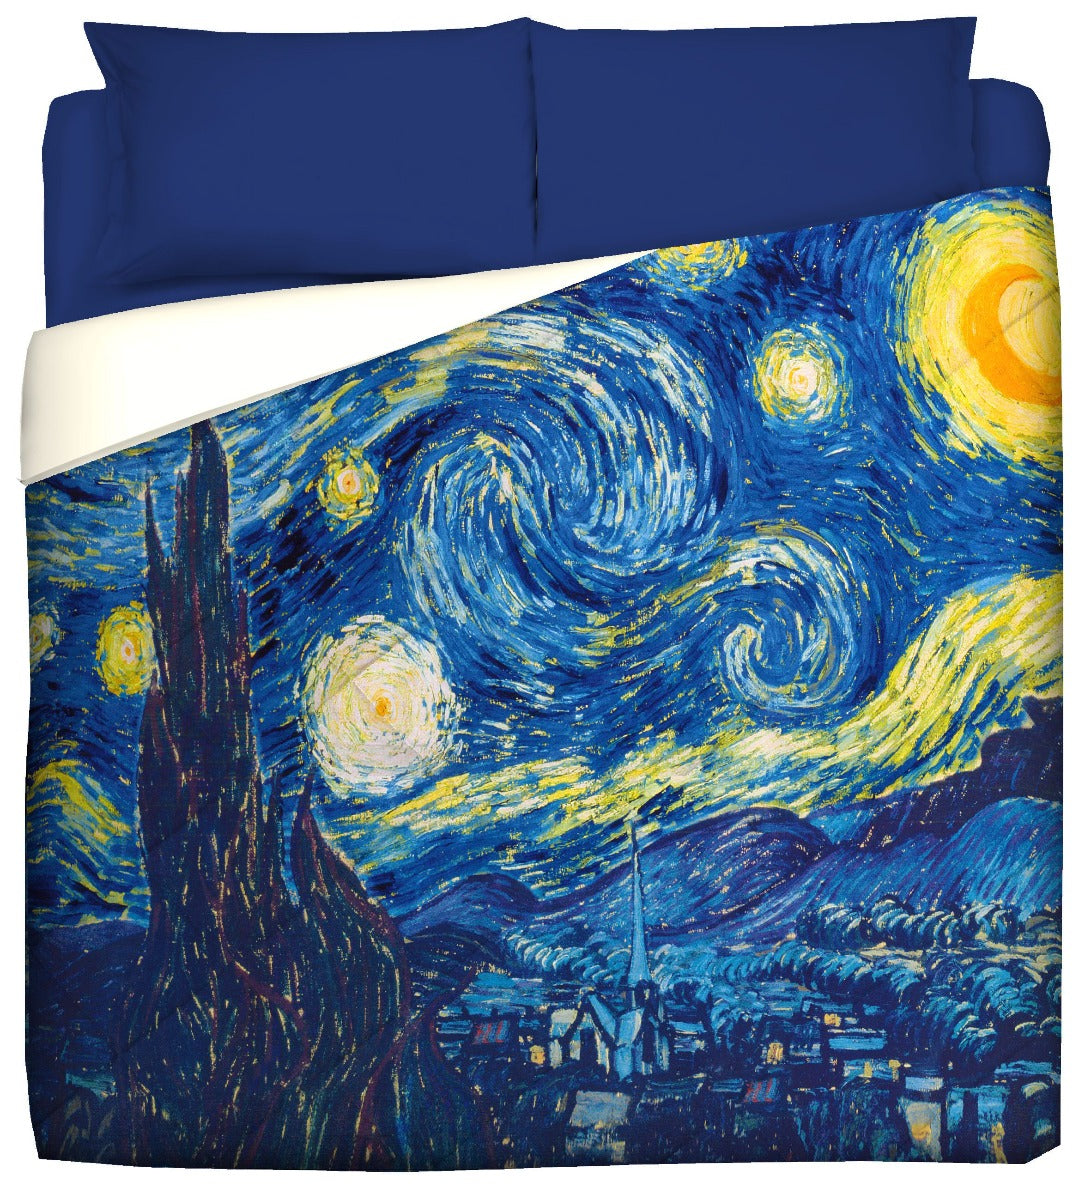 Winter Quilt - Van Gogh-Starry Night